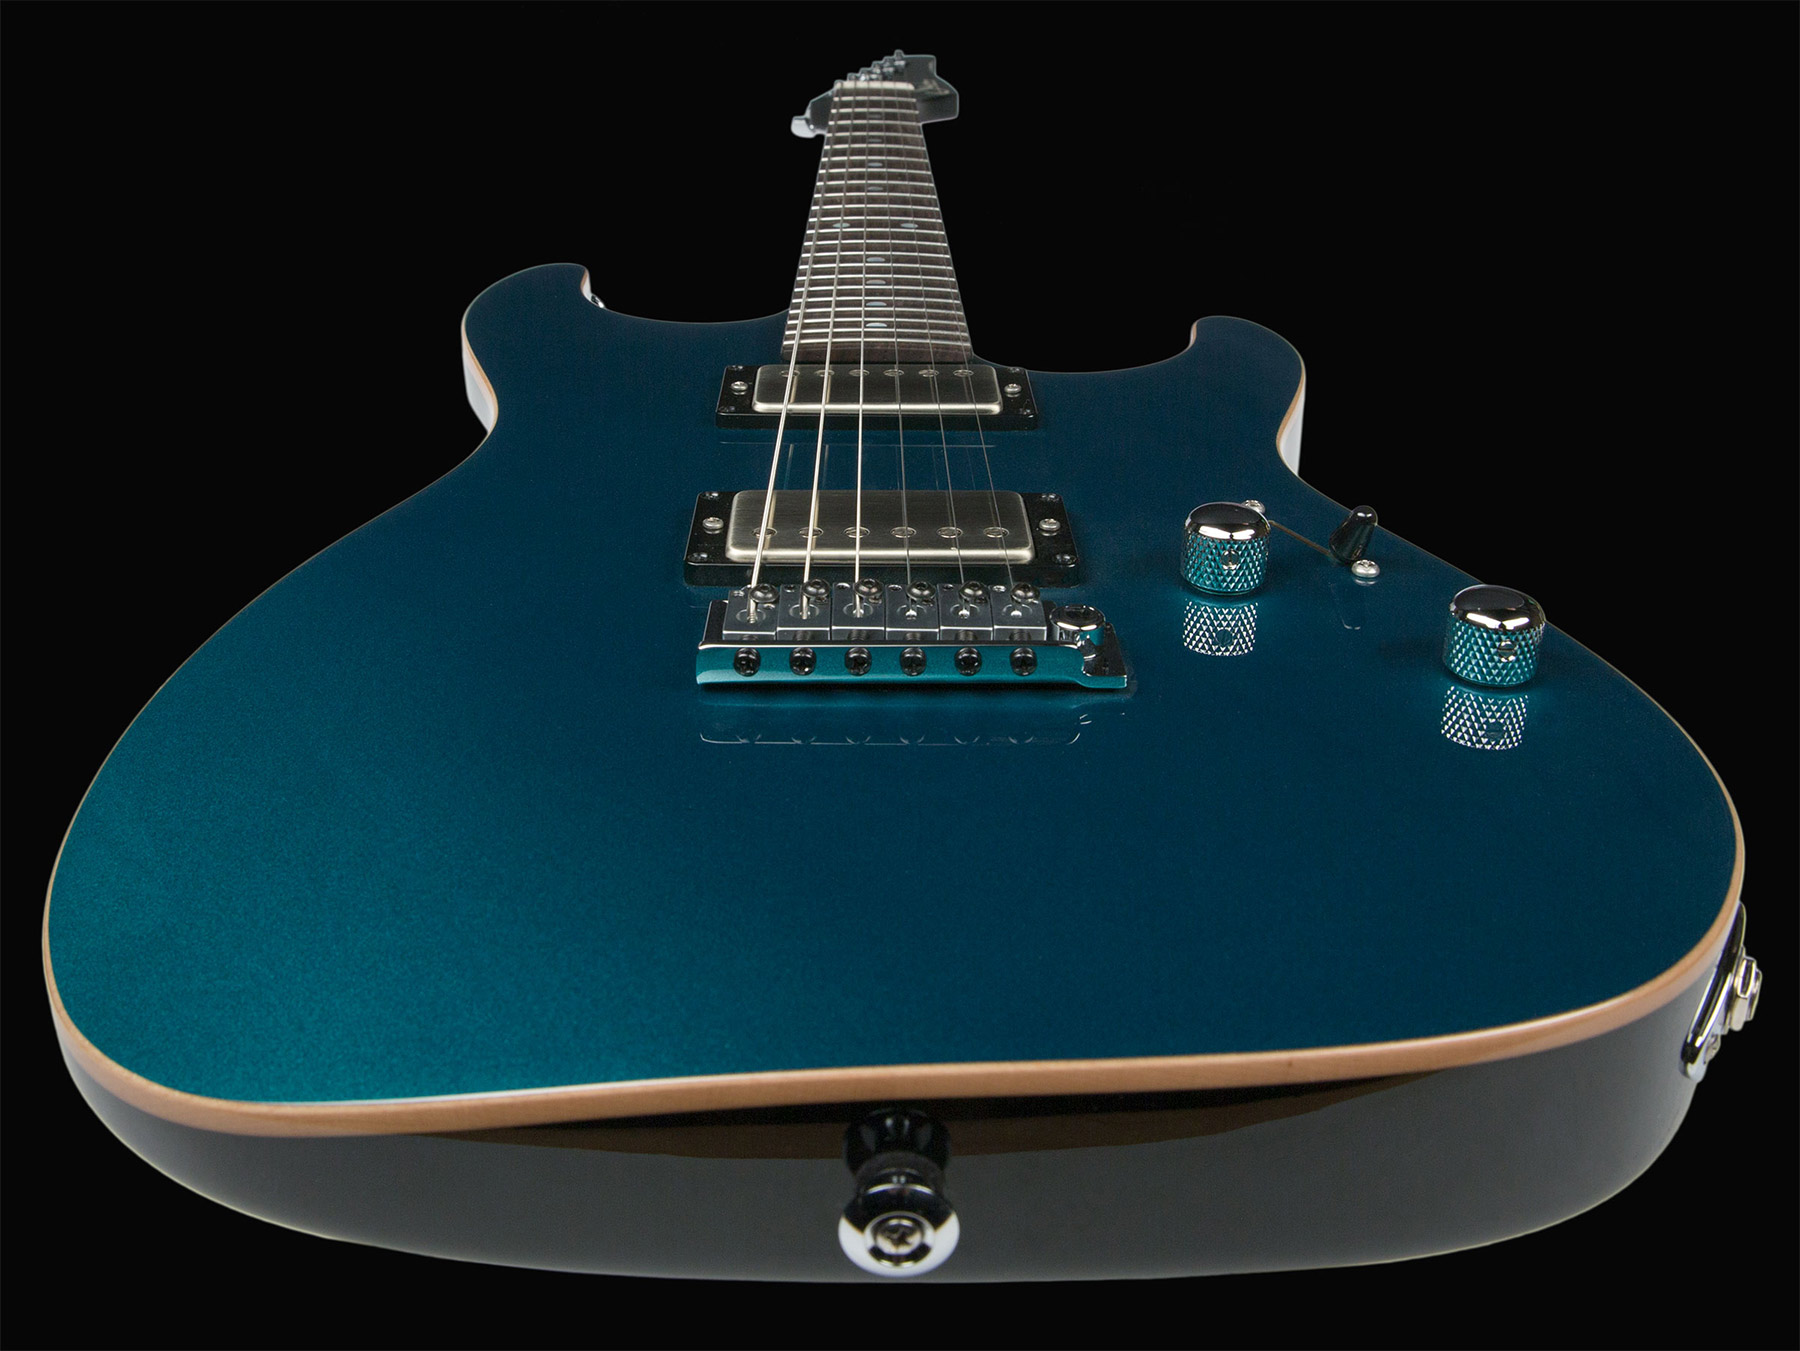 Suhr Pete Thorn Standard 01-sig-0012 Signature 2h Trem Rw - Ocean Turquoise Metallic - Str shape electric guitar - Variation 2